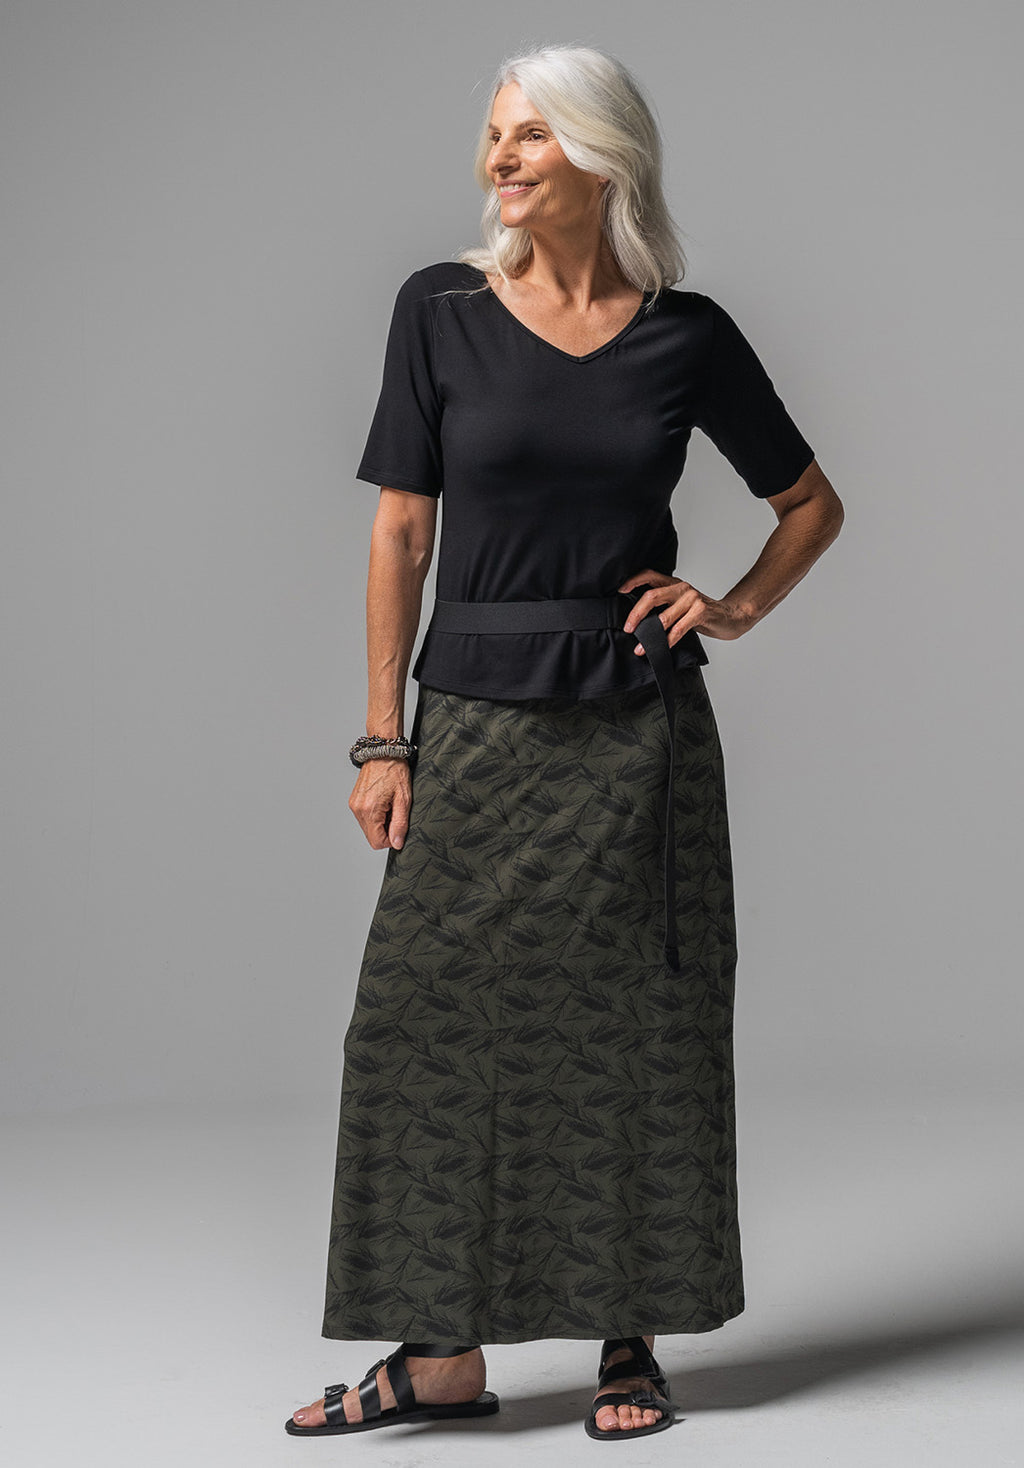 bamboo skirts australia, designer maxi skirt